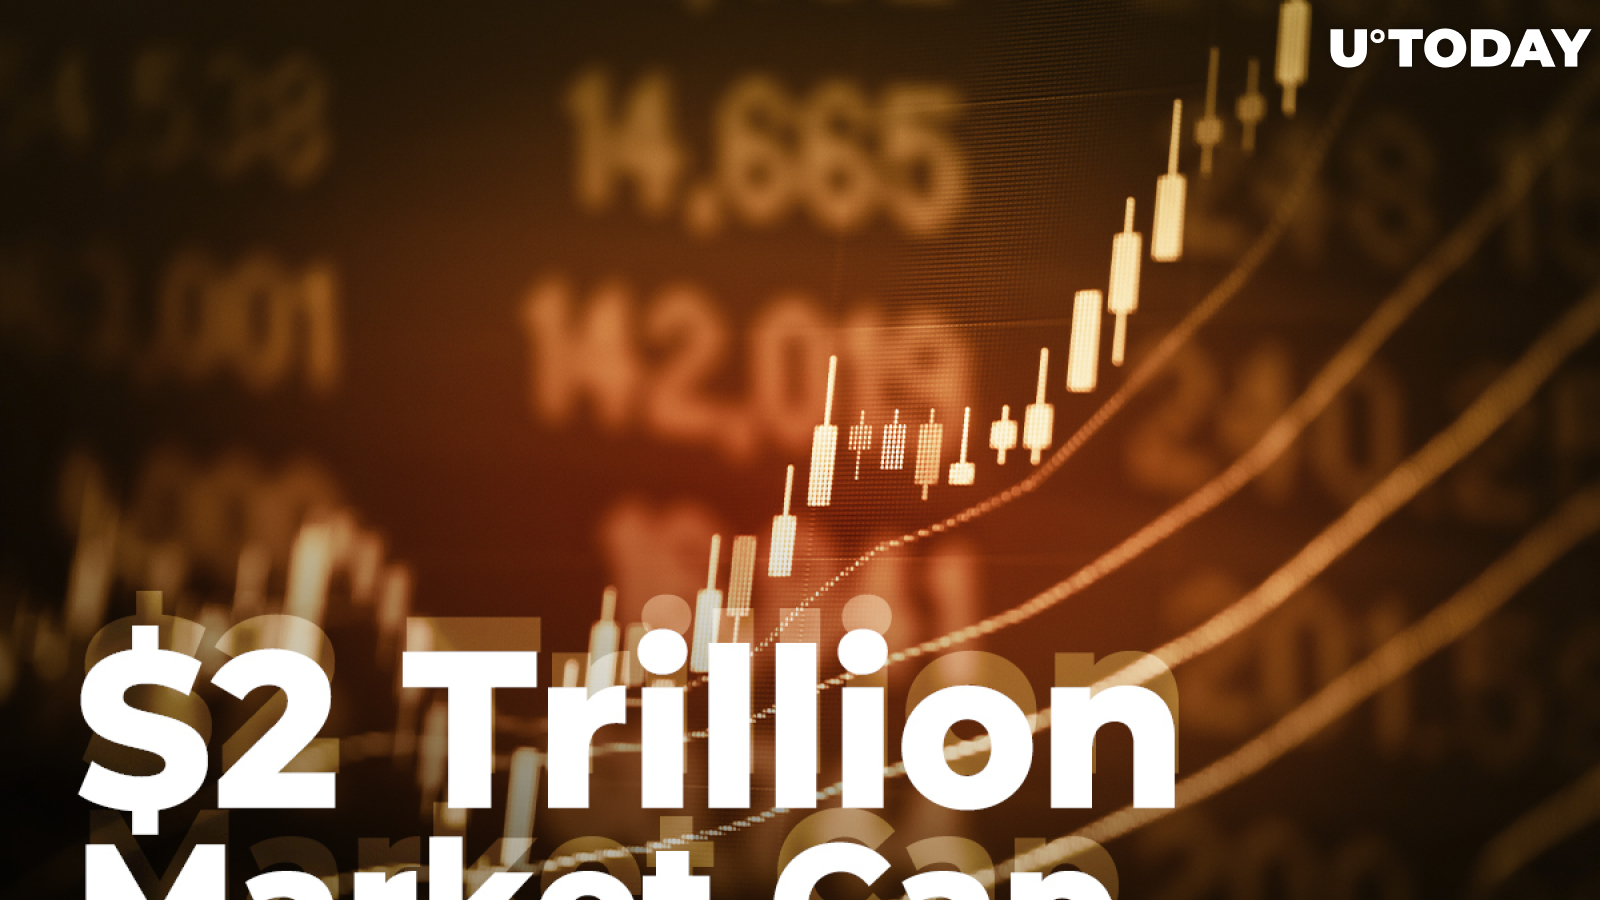 crypto market trillion 2025